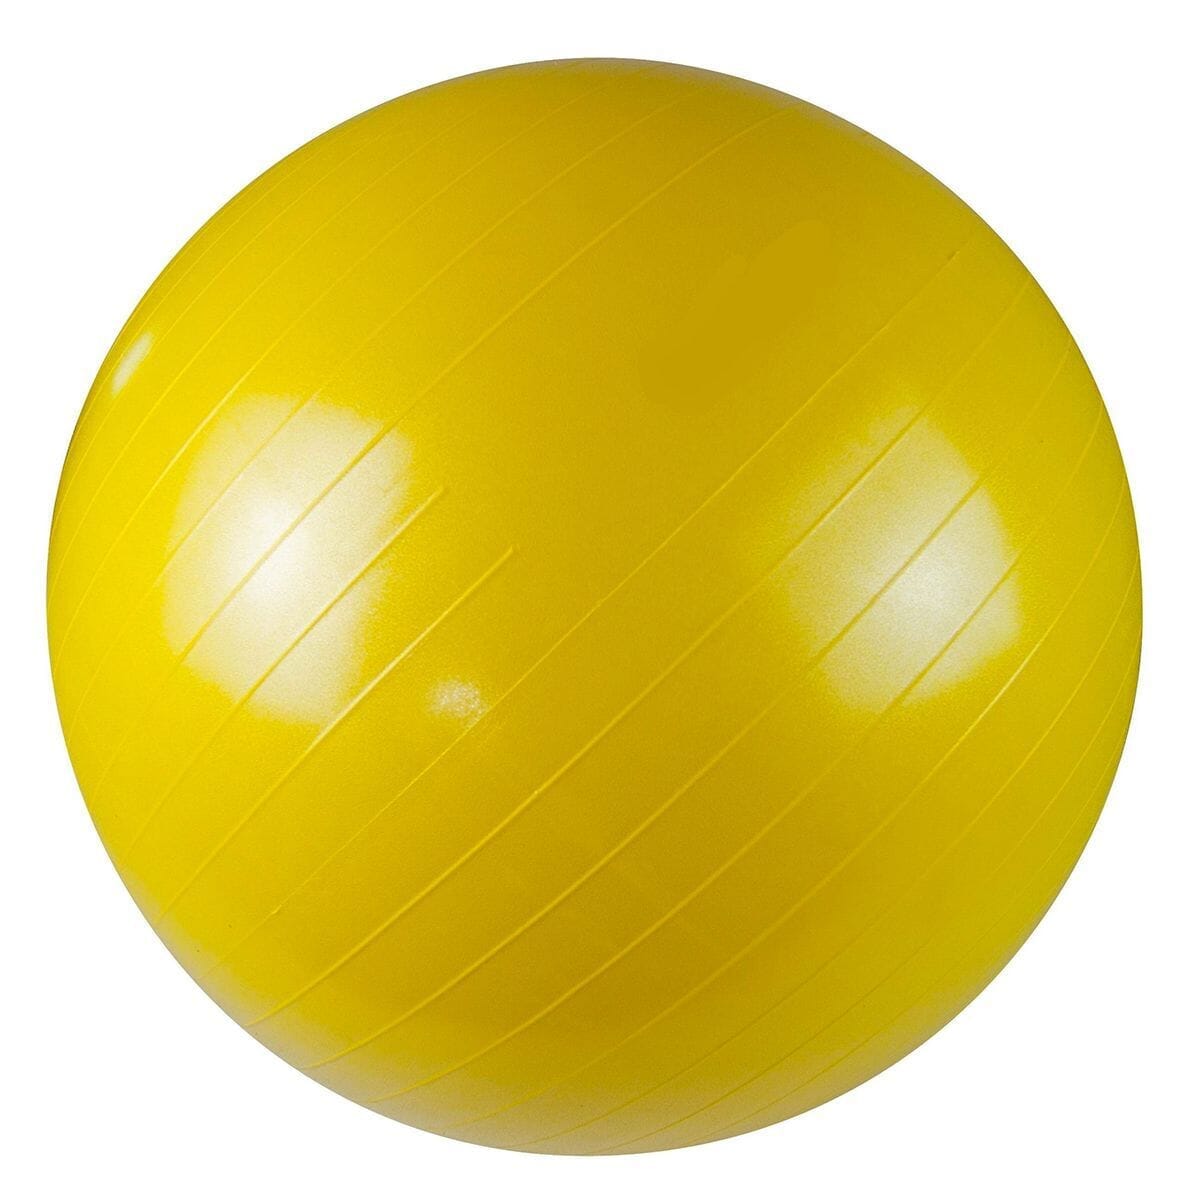 View Gym Balls Yellow information